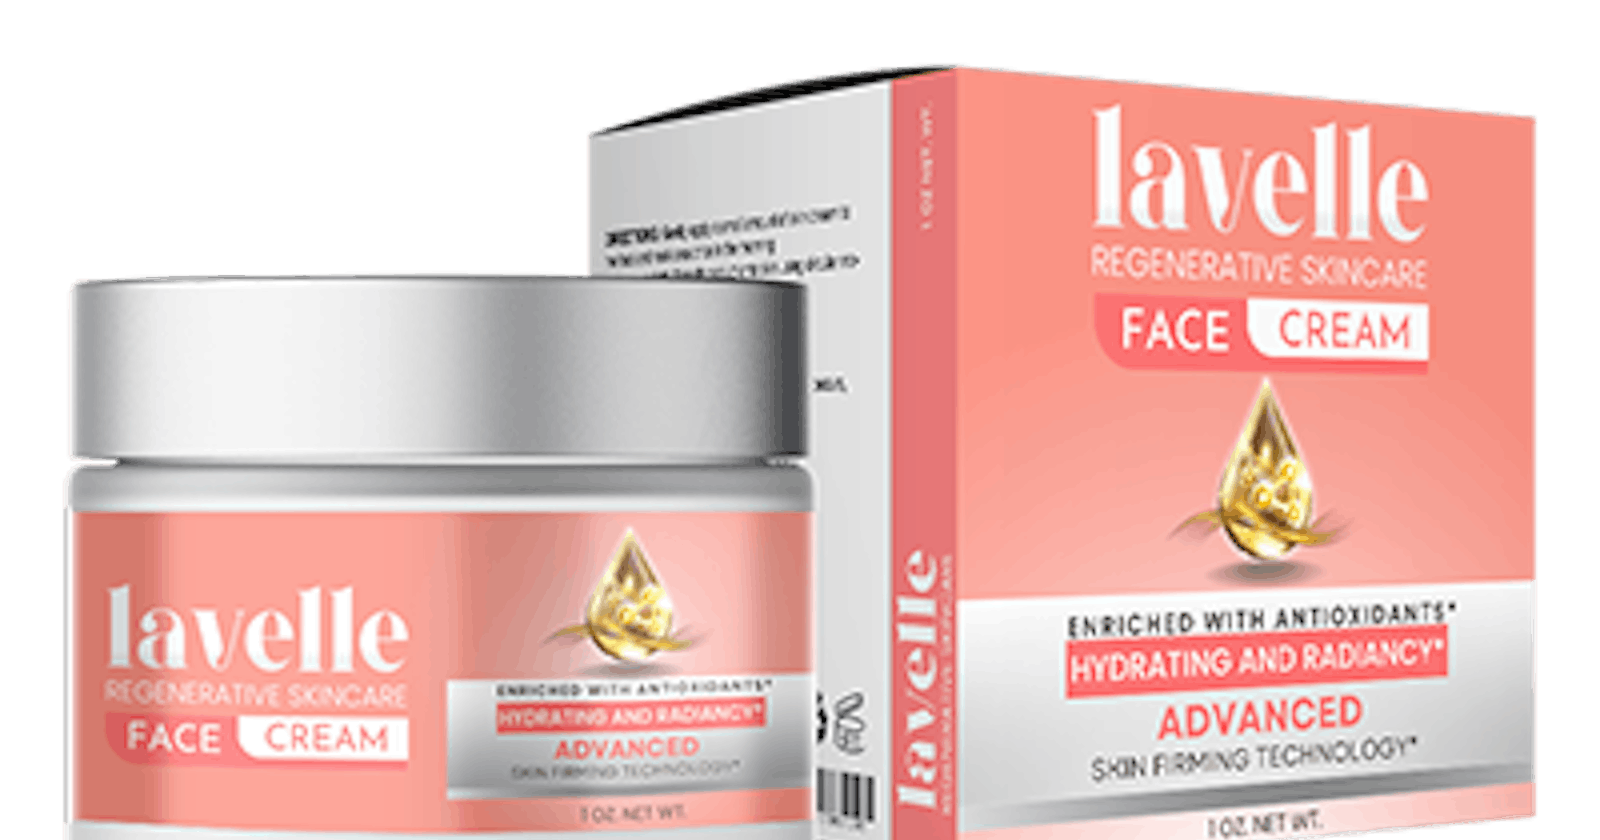 Youthful Glow: Lavelle Regenerative Skincare Face Cream